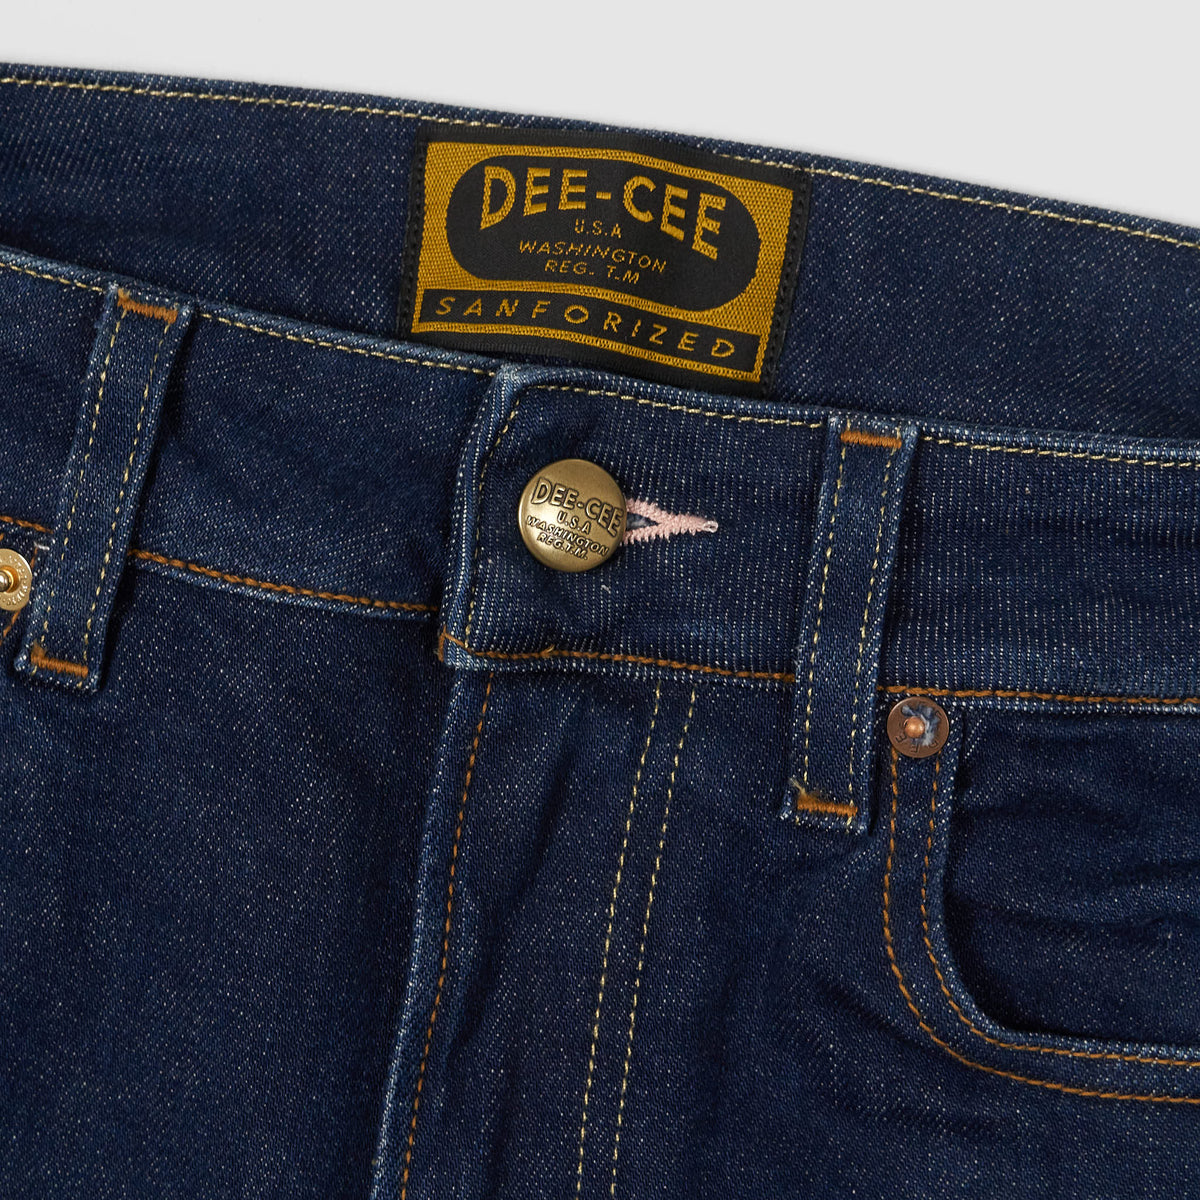 Washington Dee-Cee Ladies Rodeo Skinny Jeans